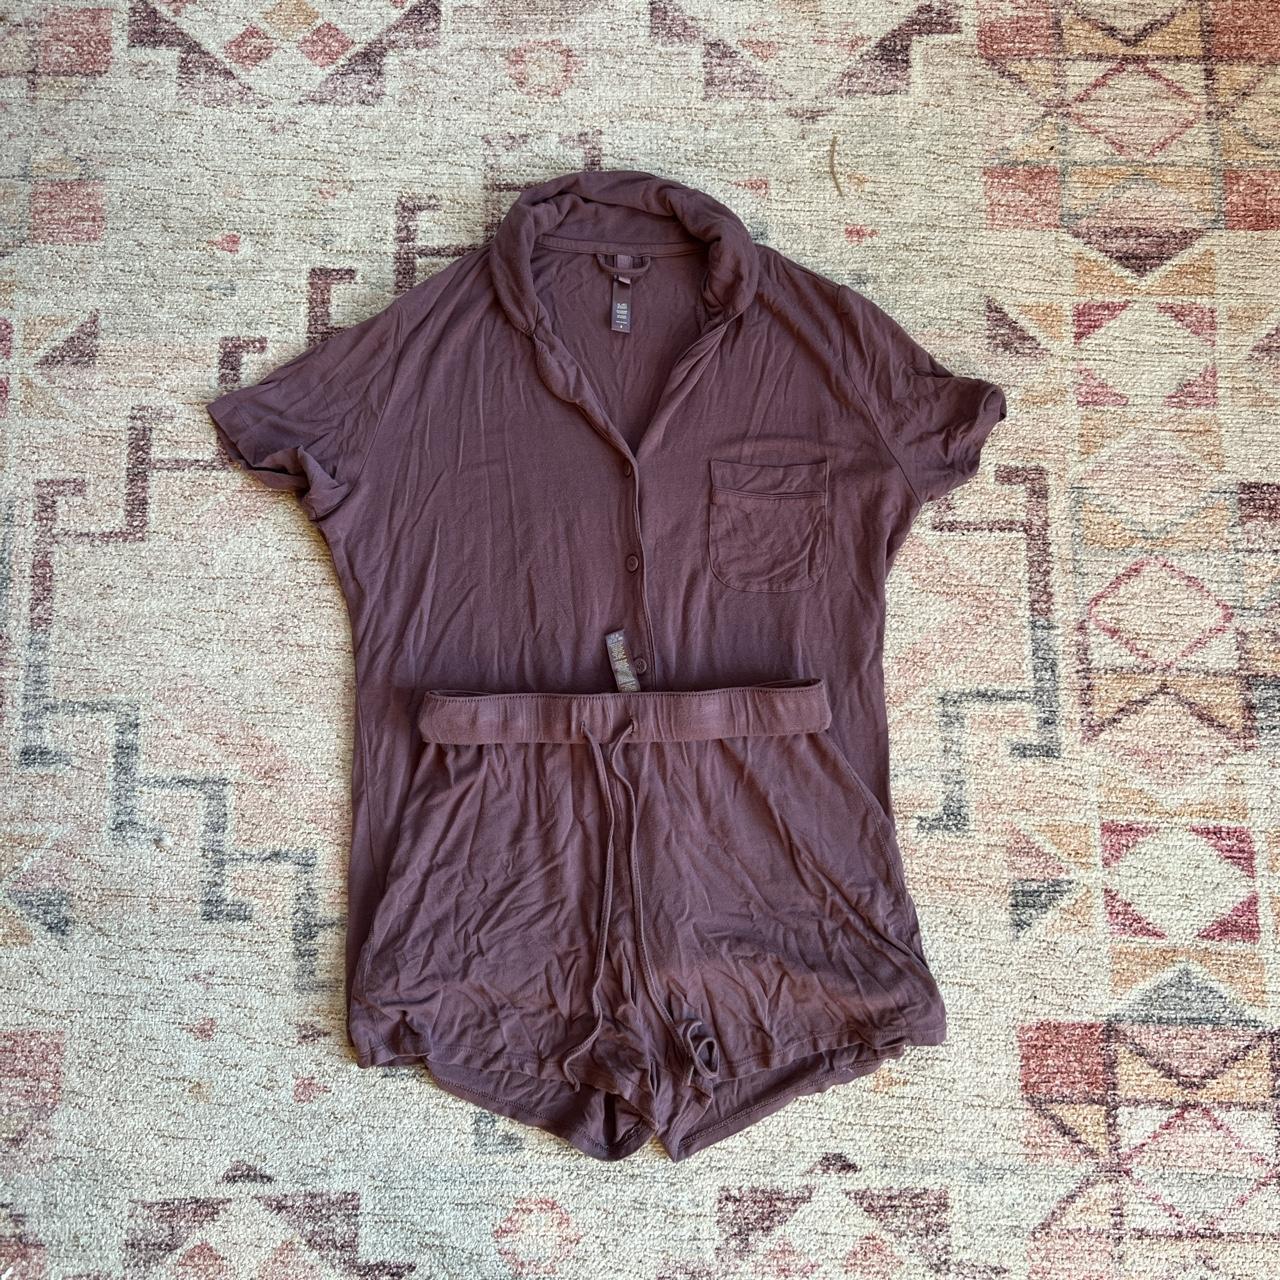 Skims original Outdoor collection sweat shorts onyx - Depop